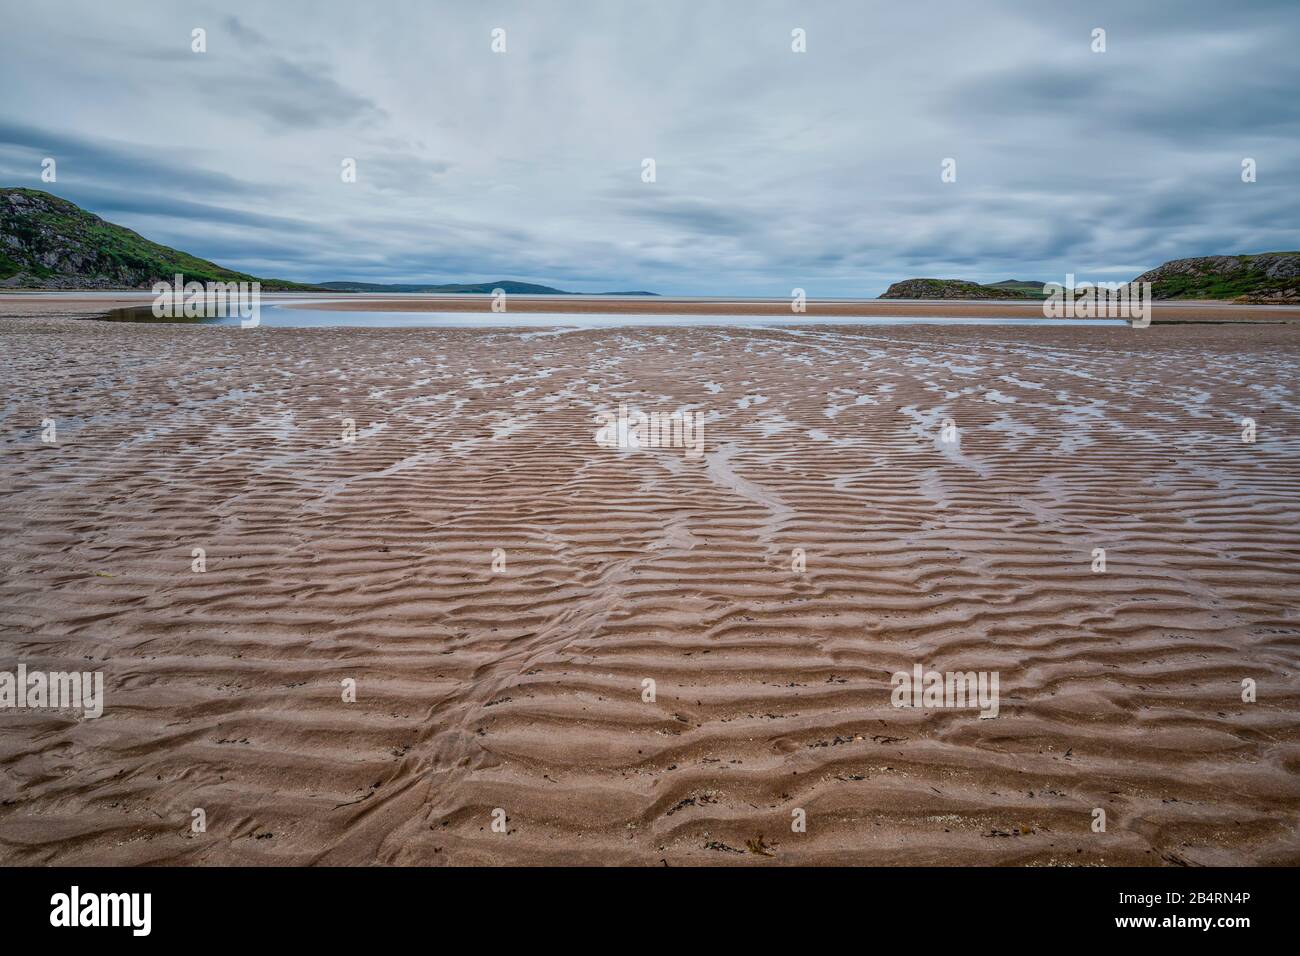 United Kingdom - Scotland - Landscape along the north coast of Scotland. Stock Photo